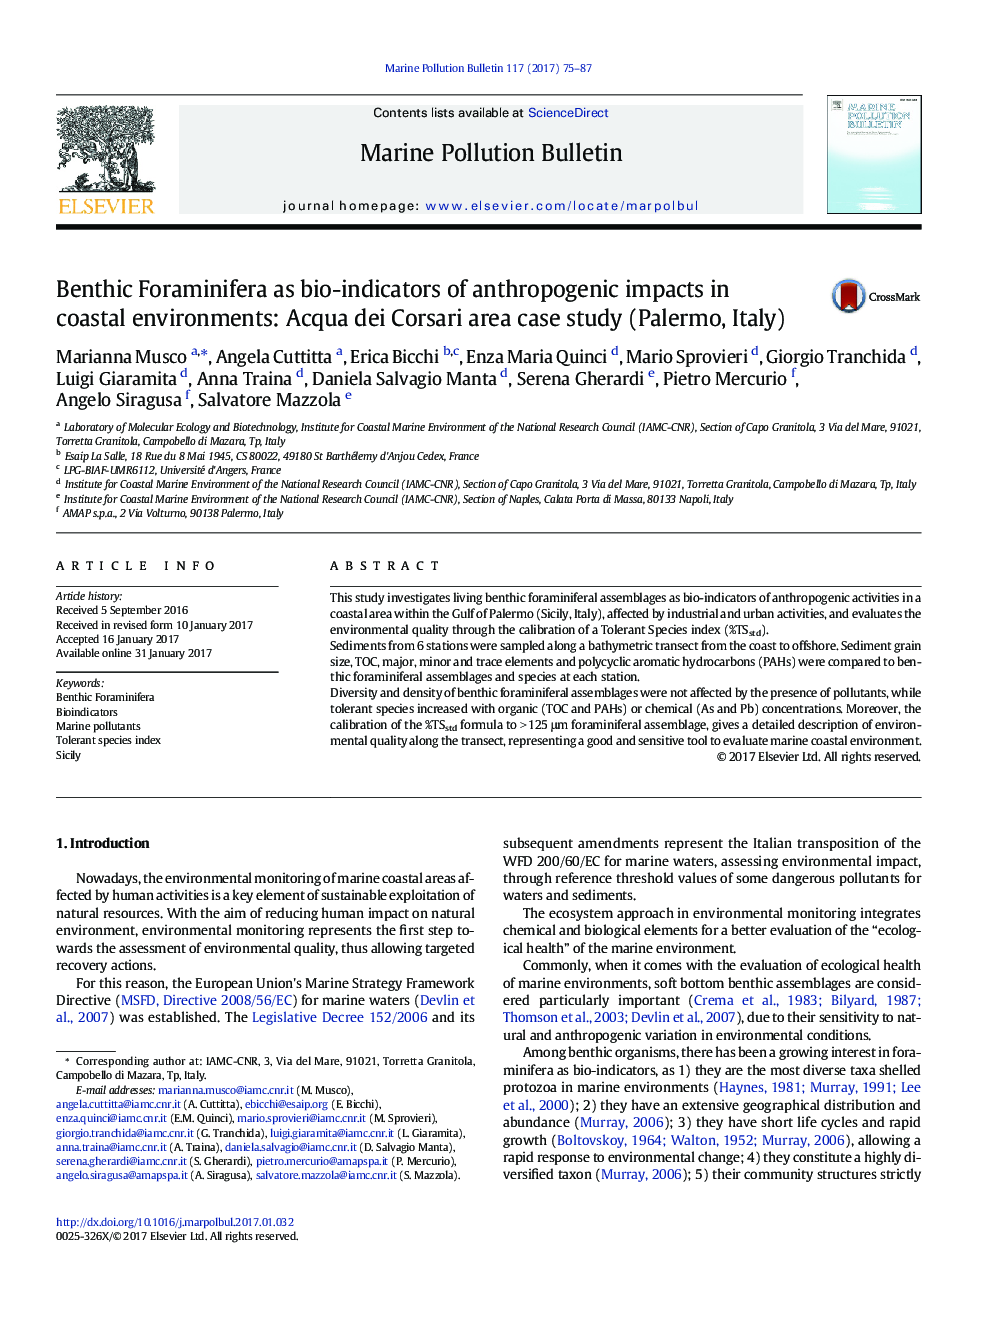 Benthic Foraminifera as bio-indicators of anthropogenic impacts in coastal environments: Acqua dei Corsari area case study (Palermo, Italy)